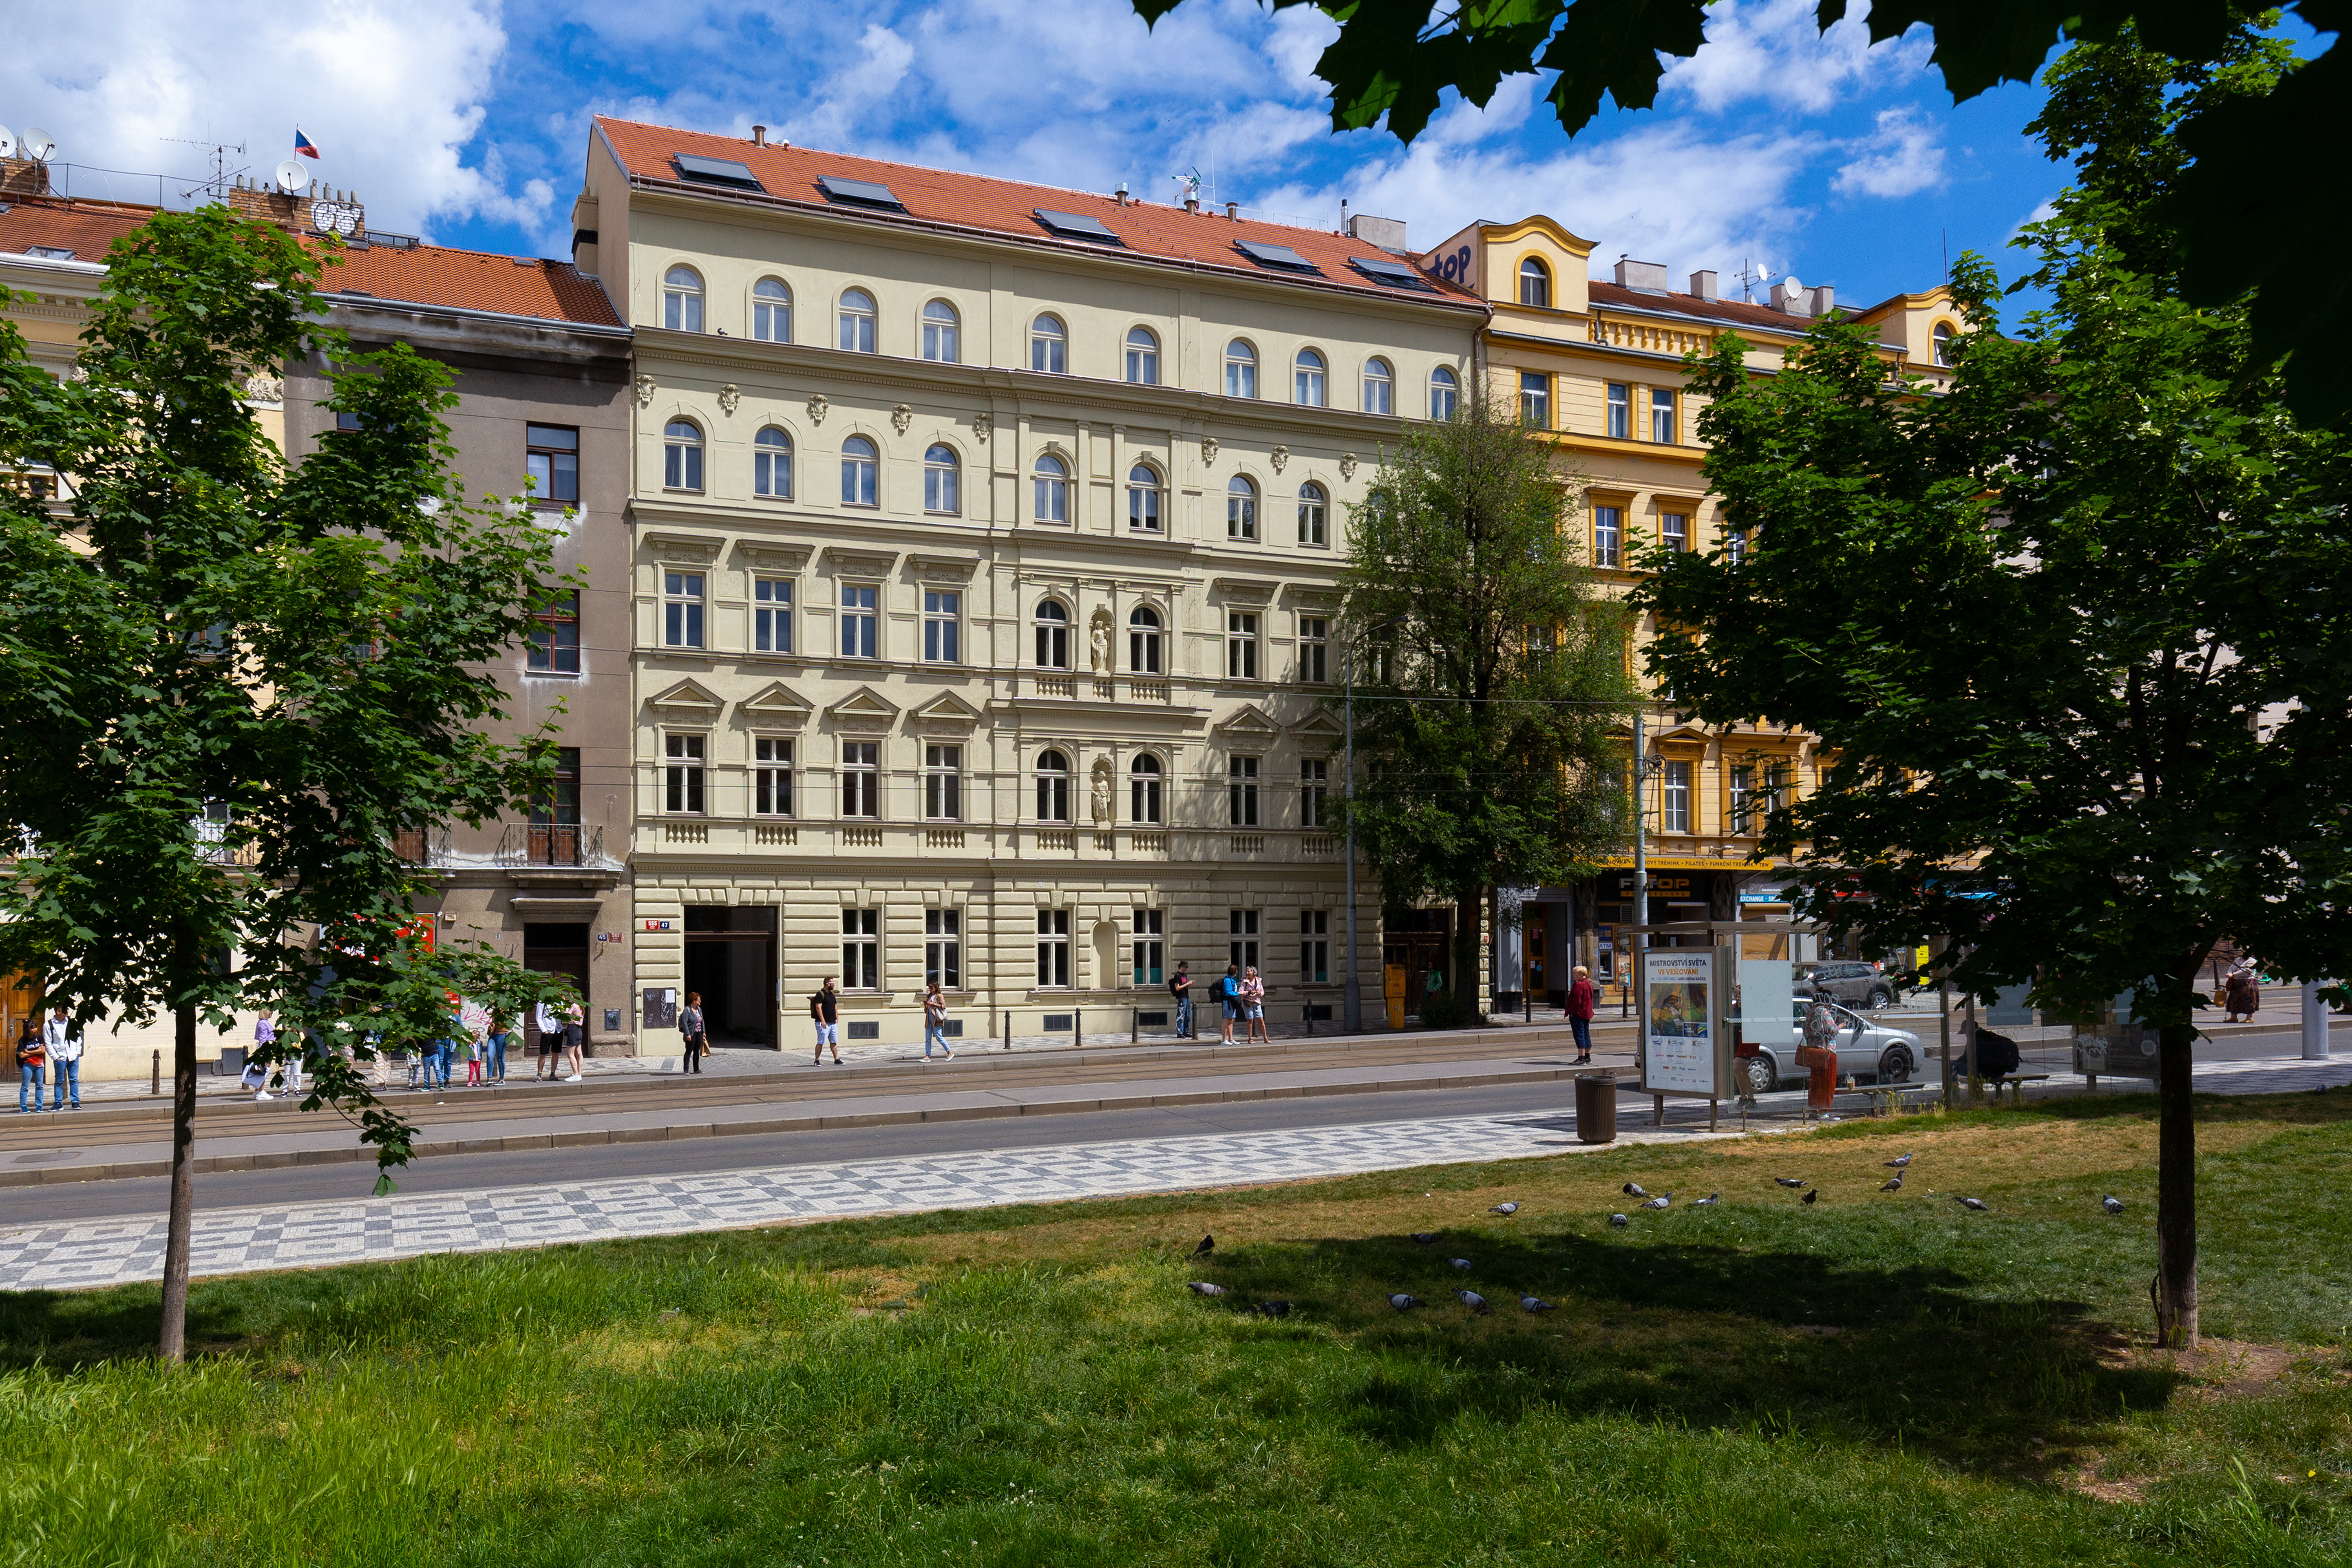 Rekonstrukce historické budovy v Praze na Žižkově - CZ